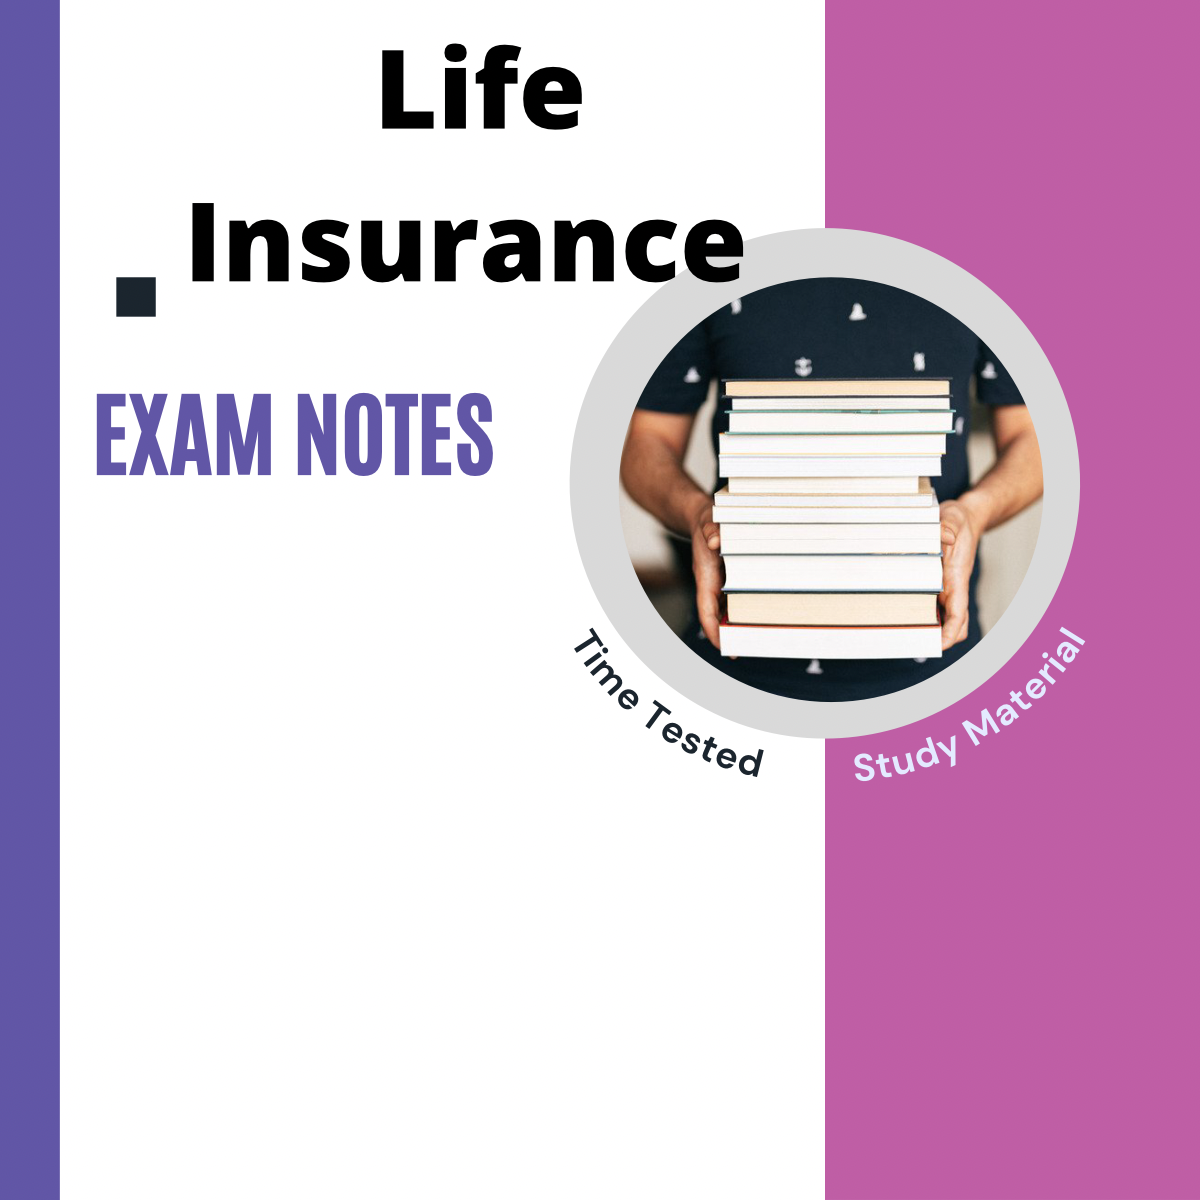 Life Insurance Exam Notes